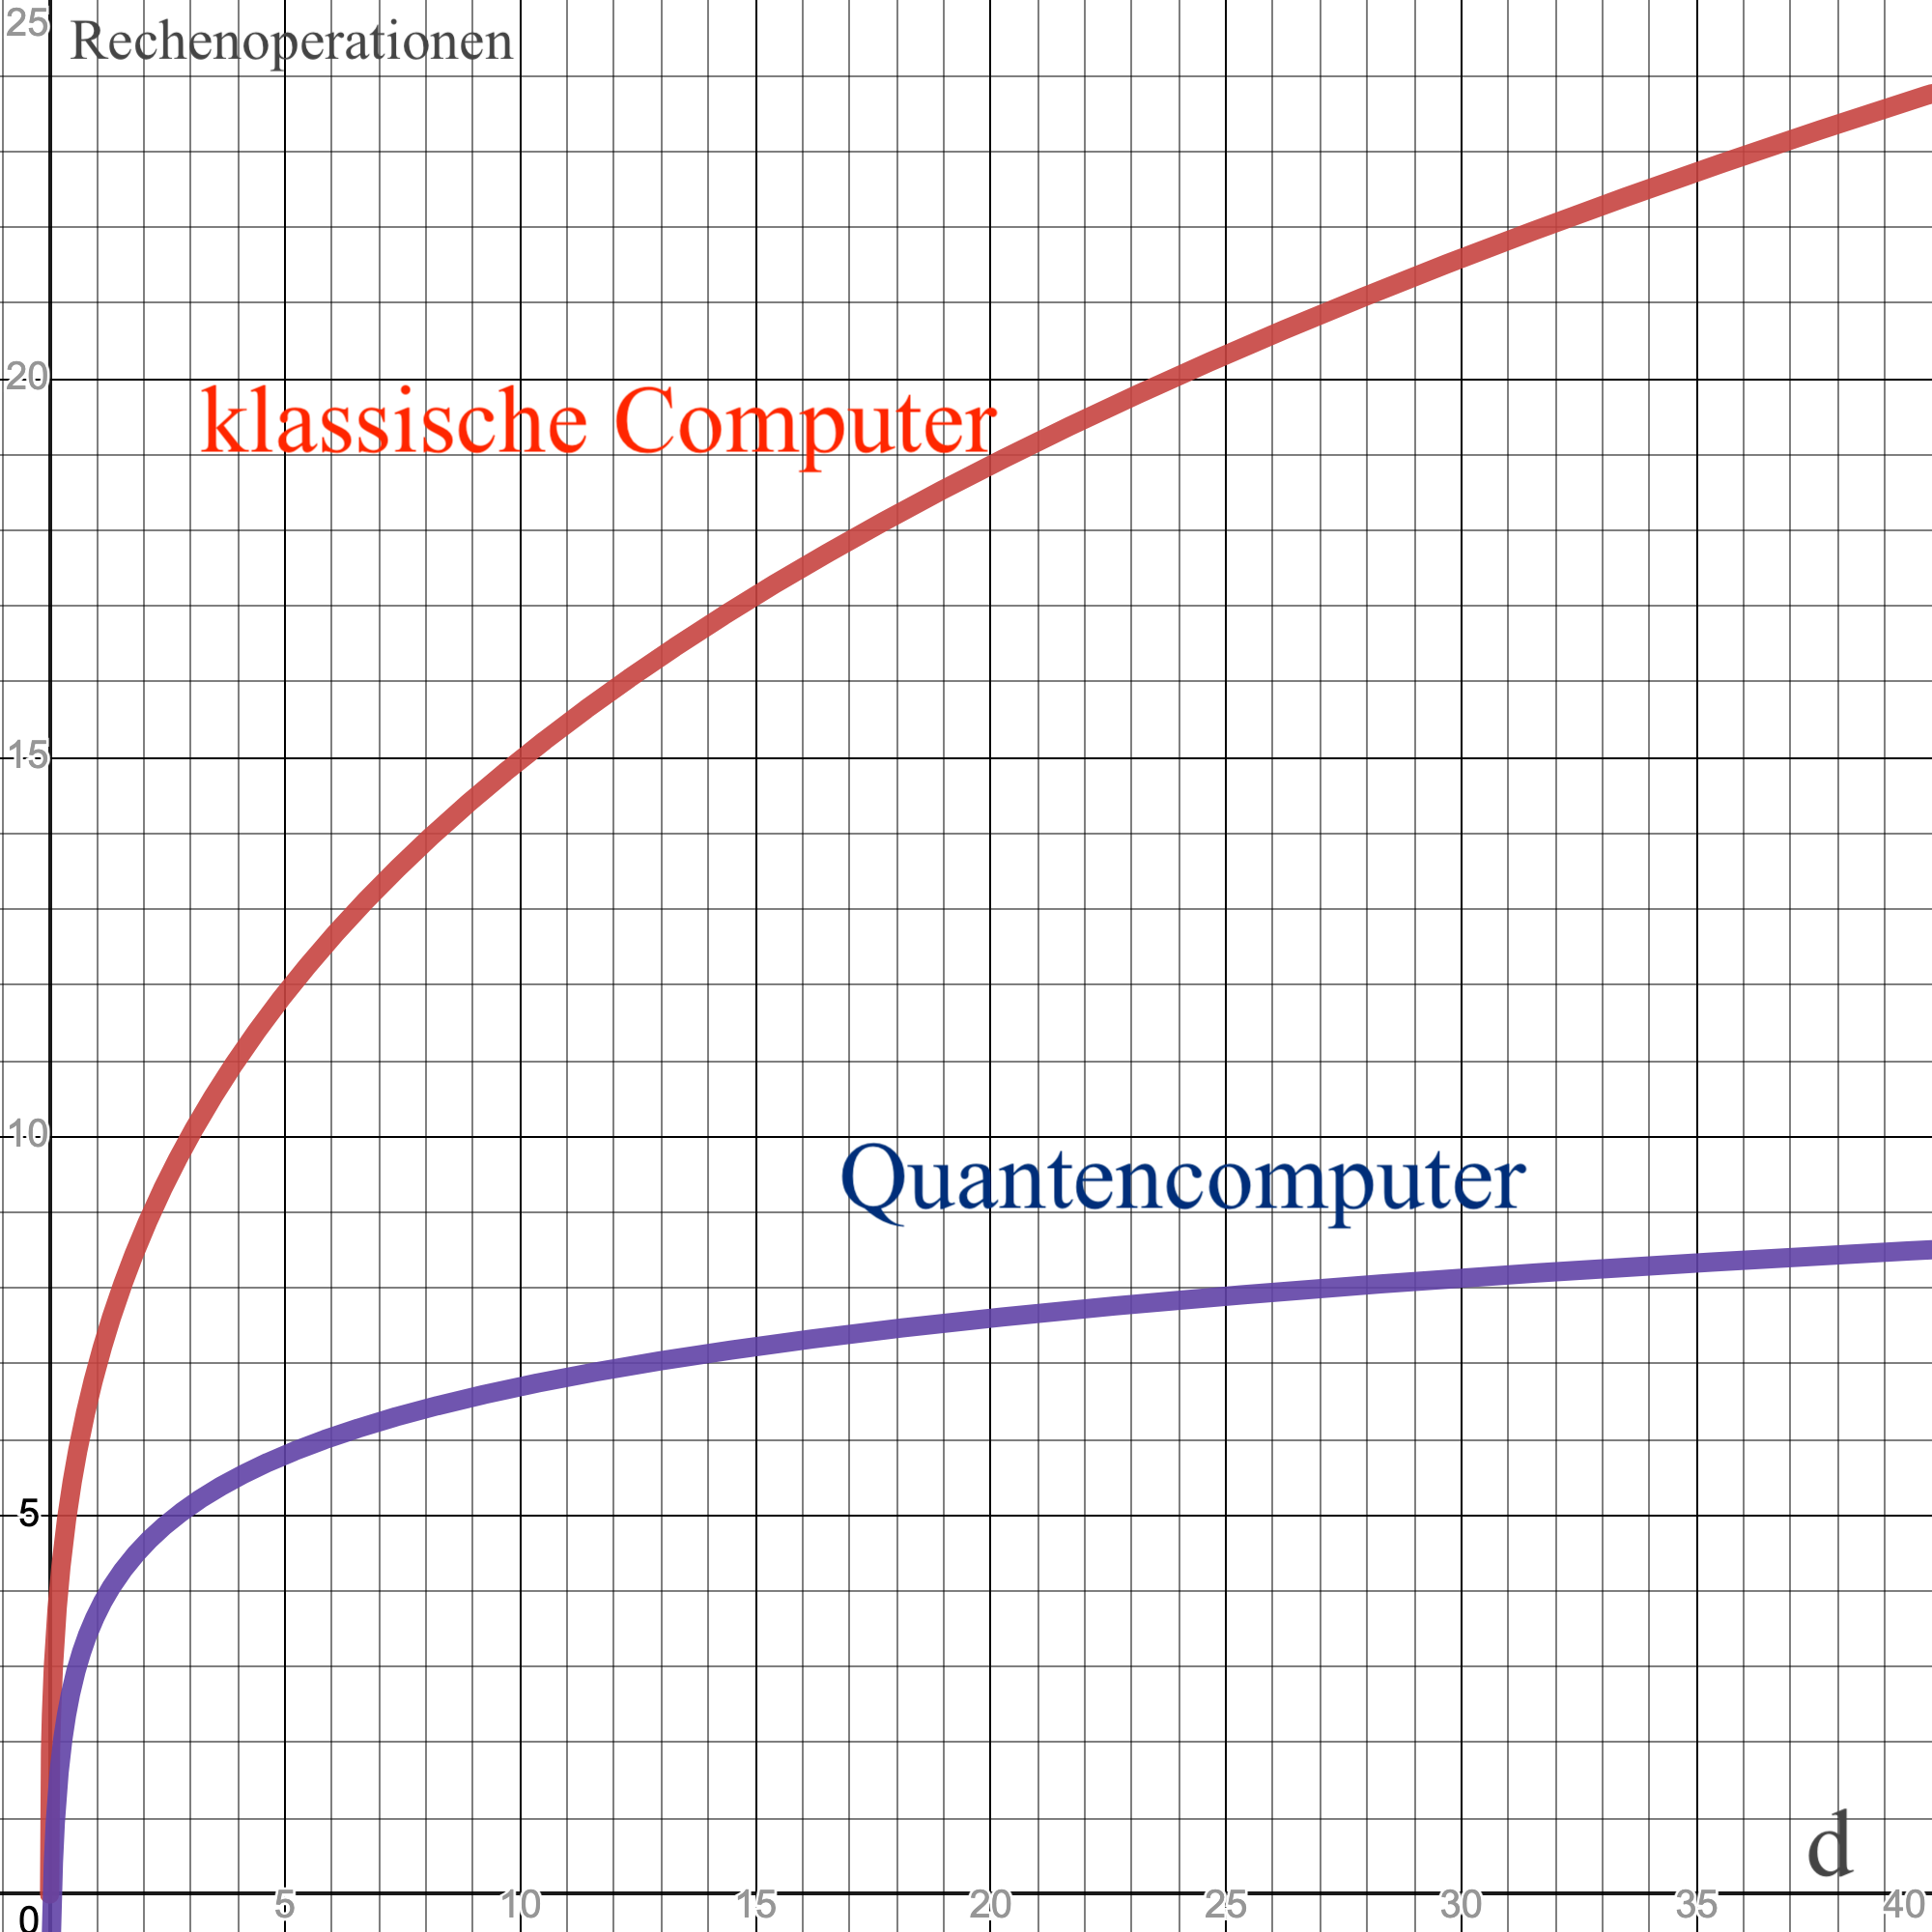 Rechenoperationen Quantencomputer versus klassische Rechner